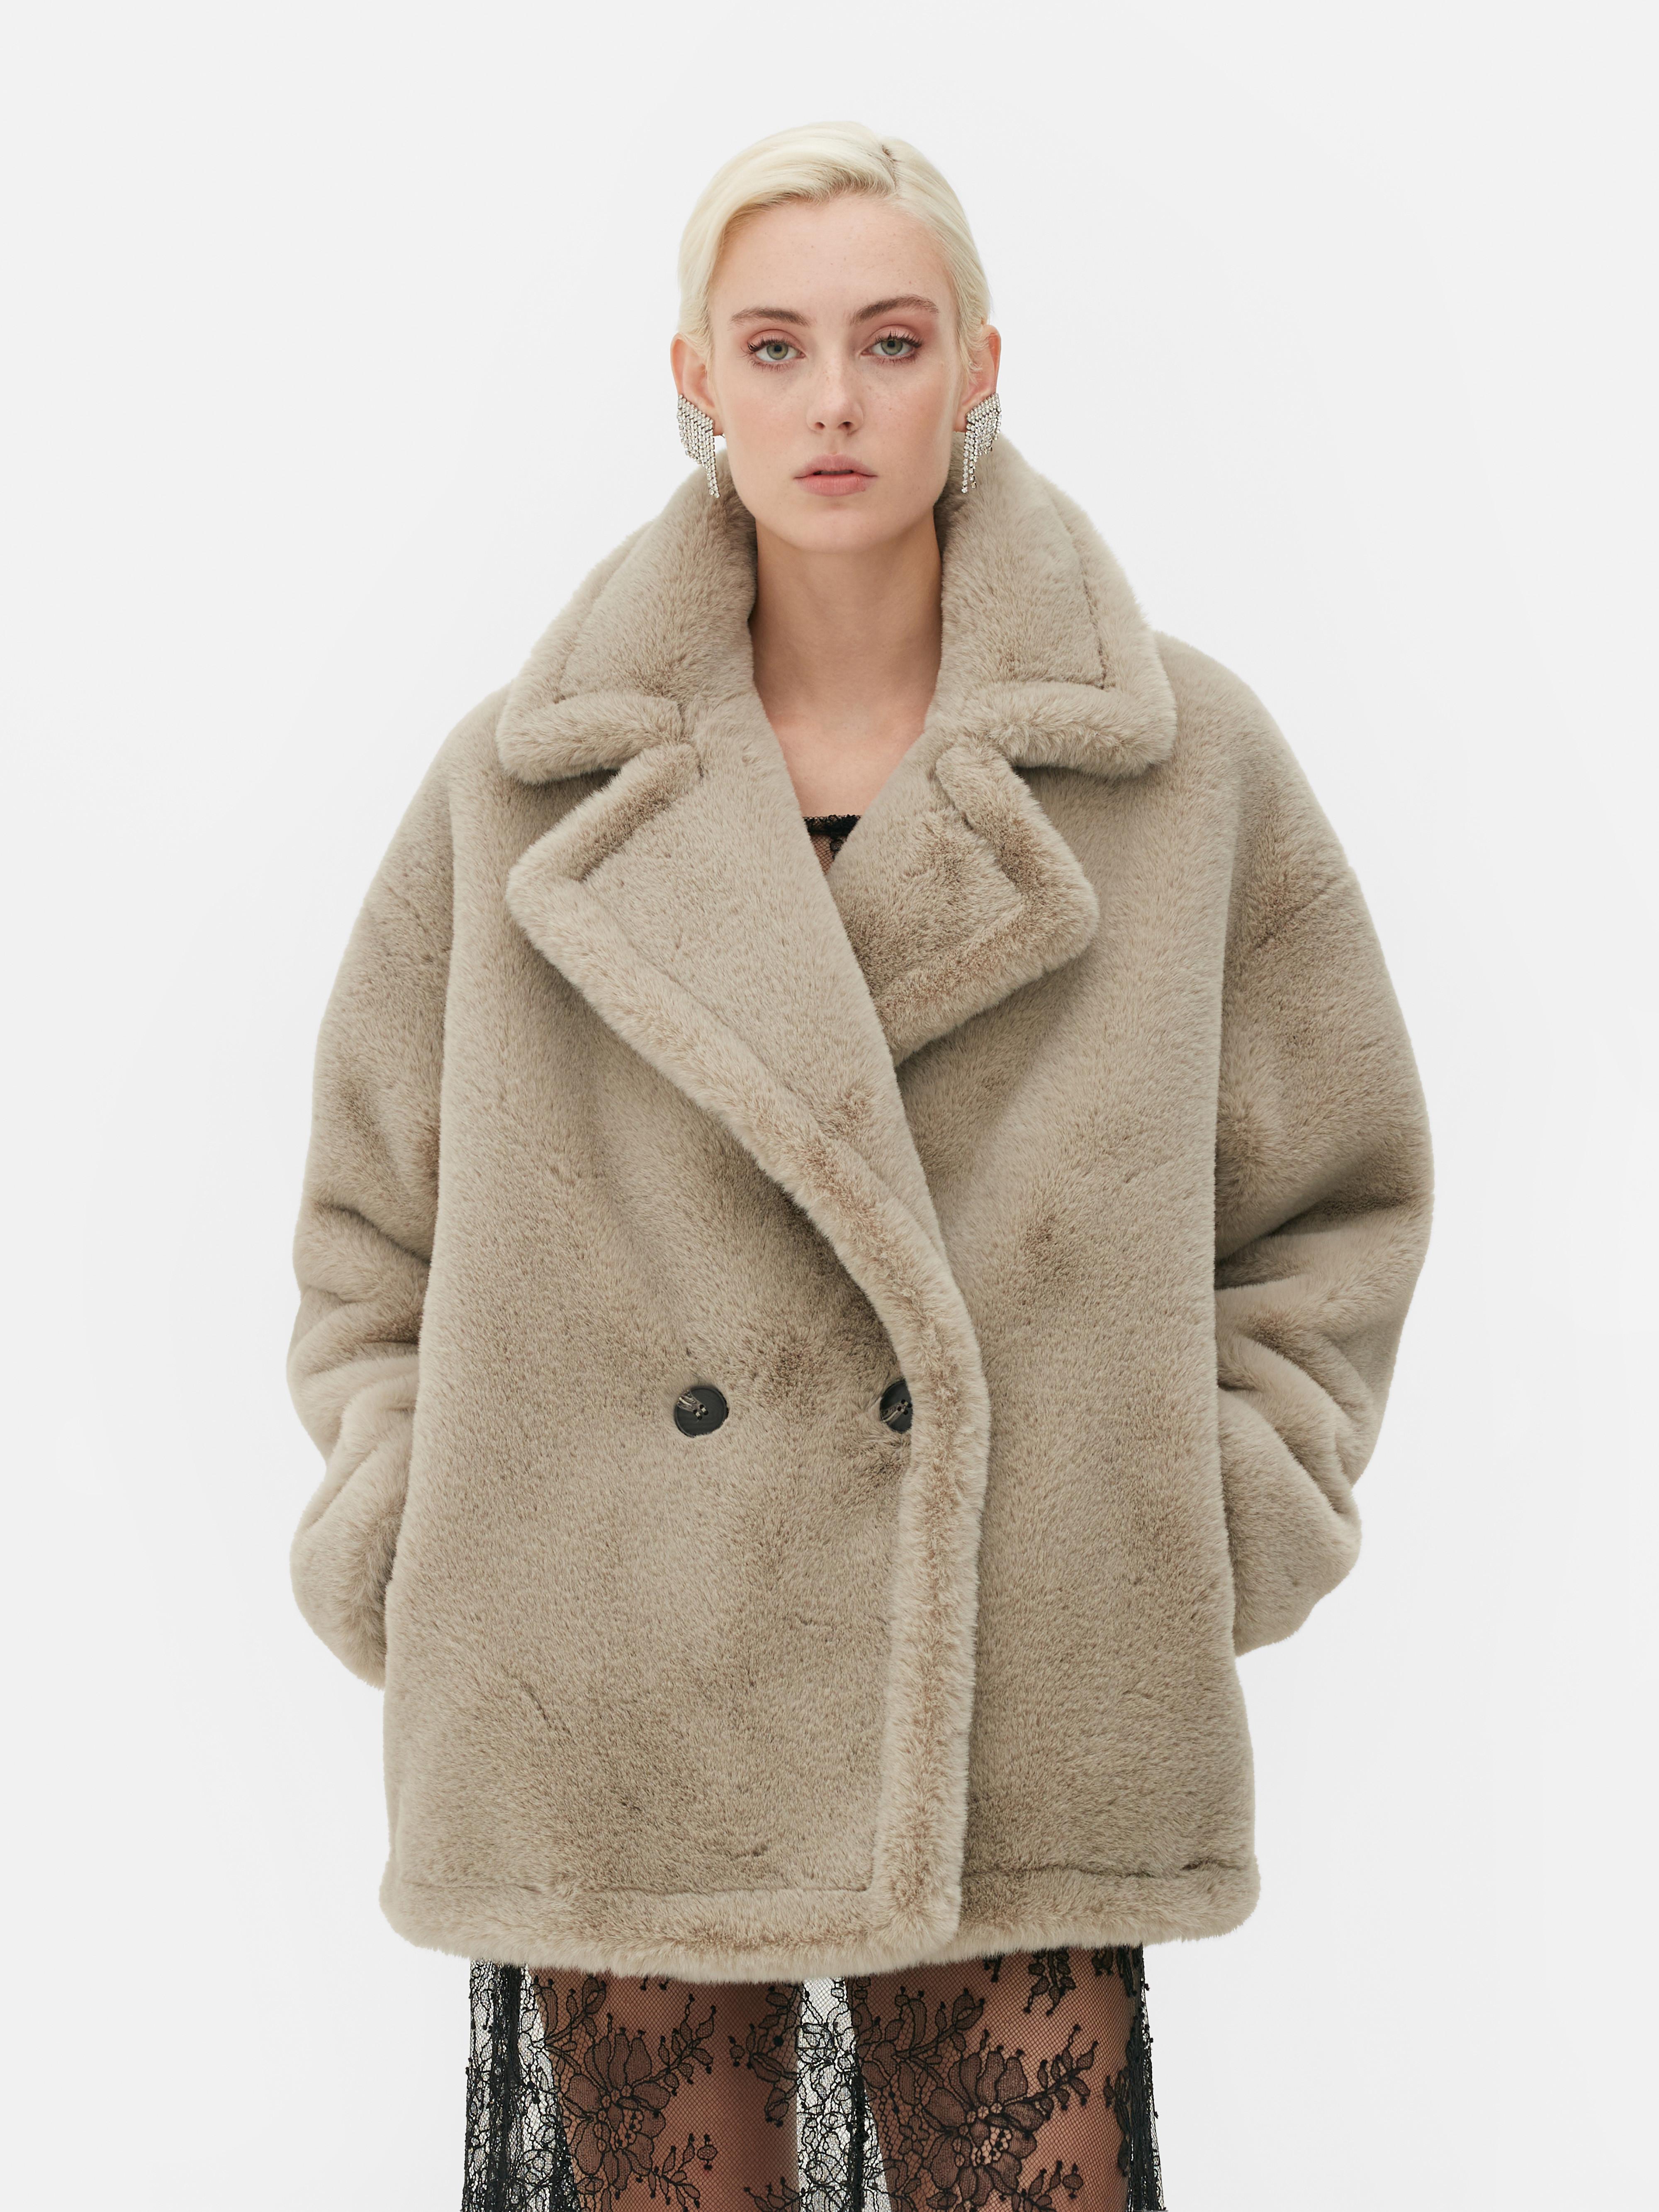 Rita Ora Double-Breasted Faux Fur Coat